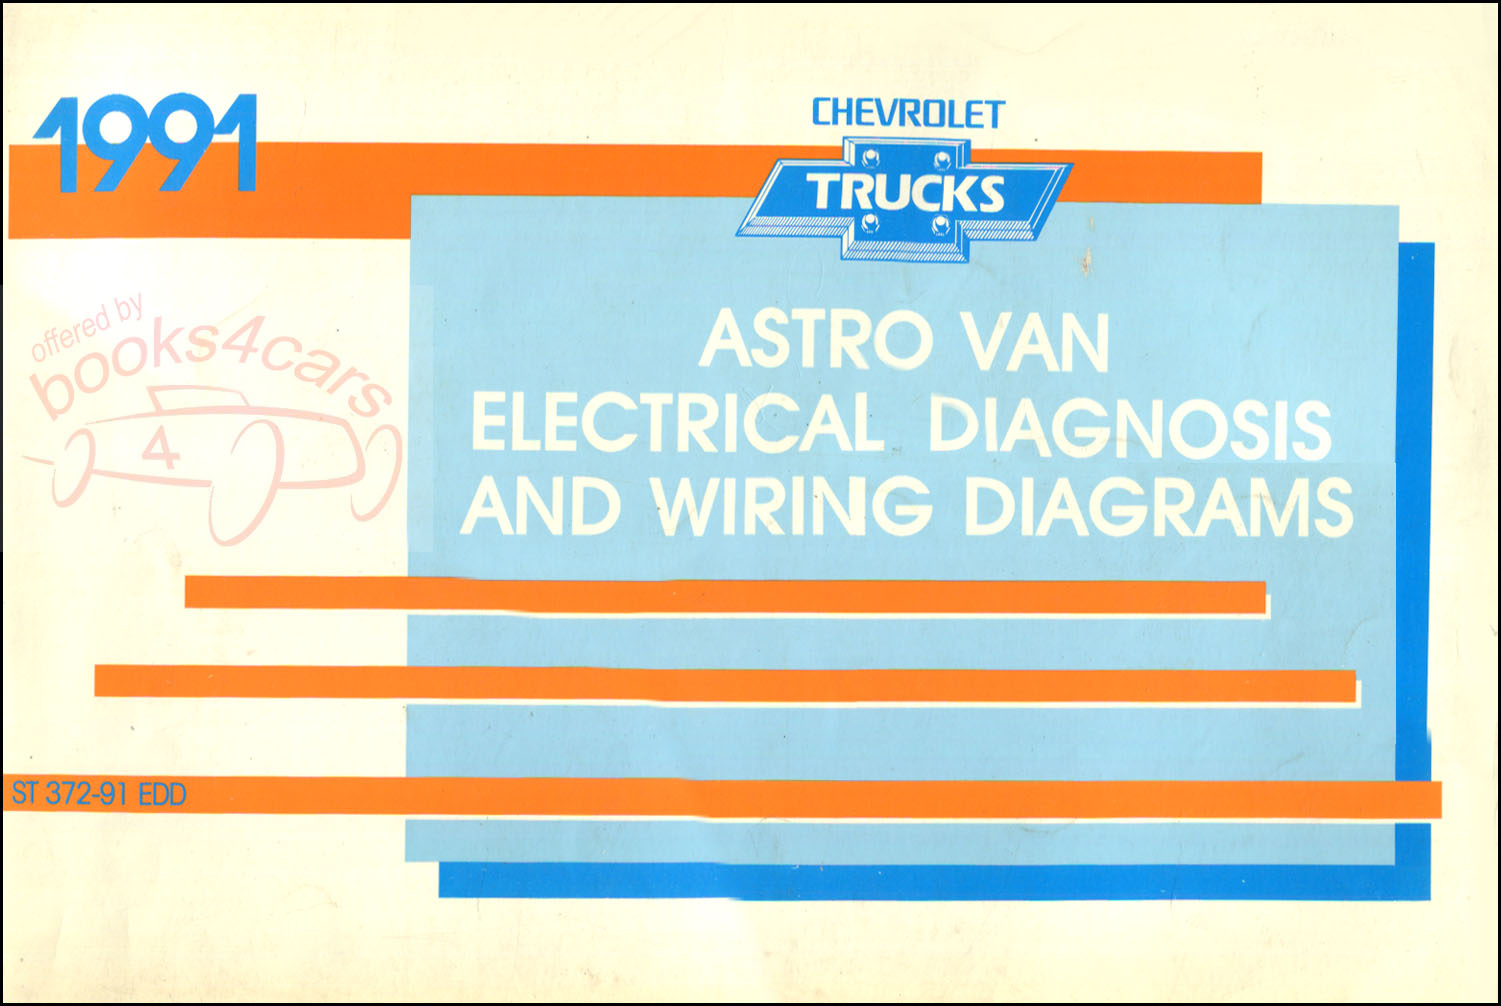 91 Astro minivan Electrical Diagnosis shop service repair manual & Wiring diagrams by Chevrolet Truck & GMC Safari